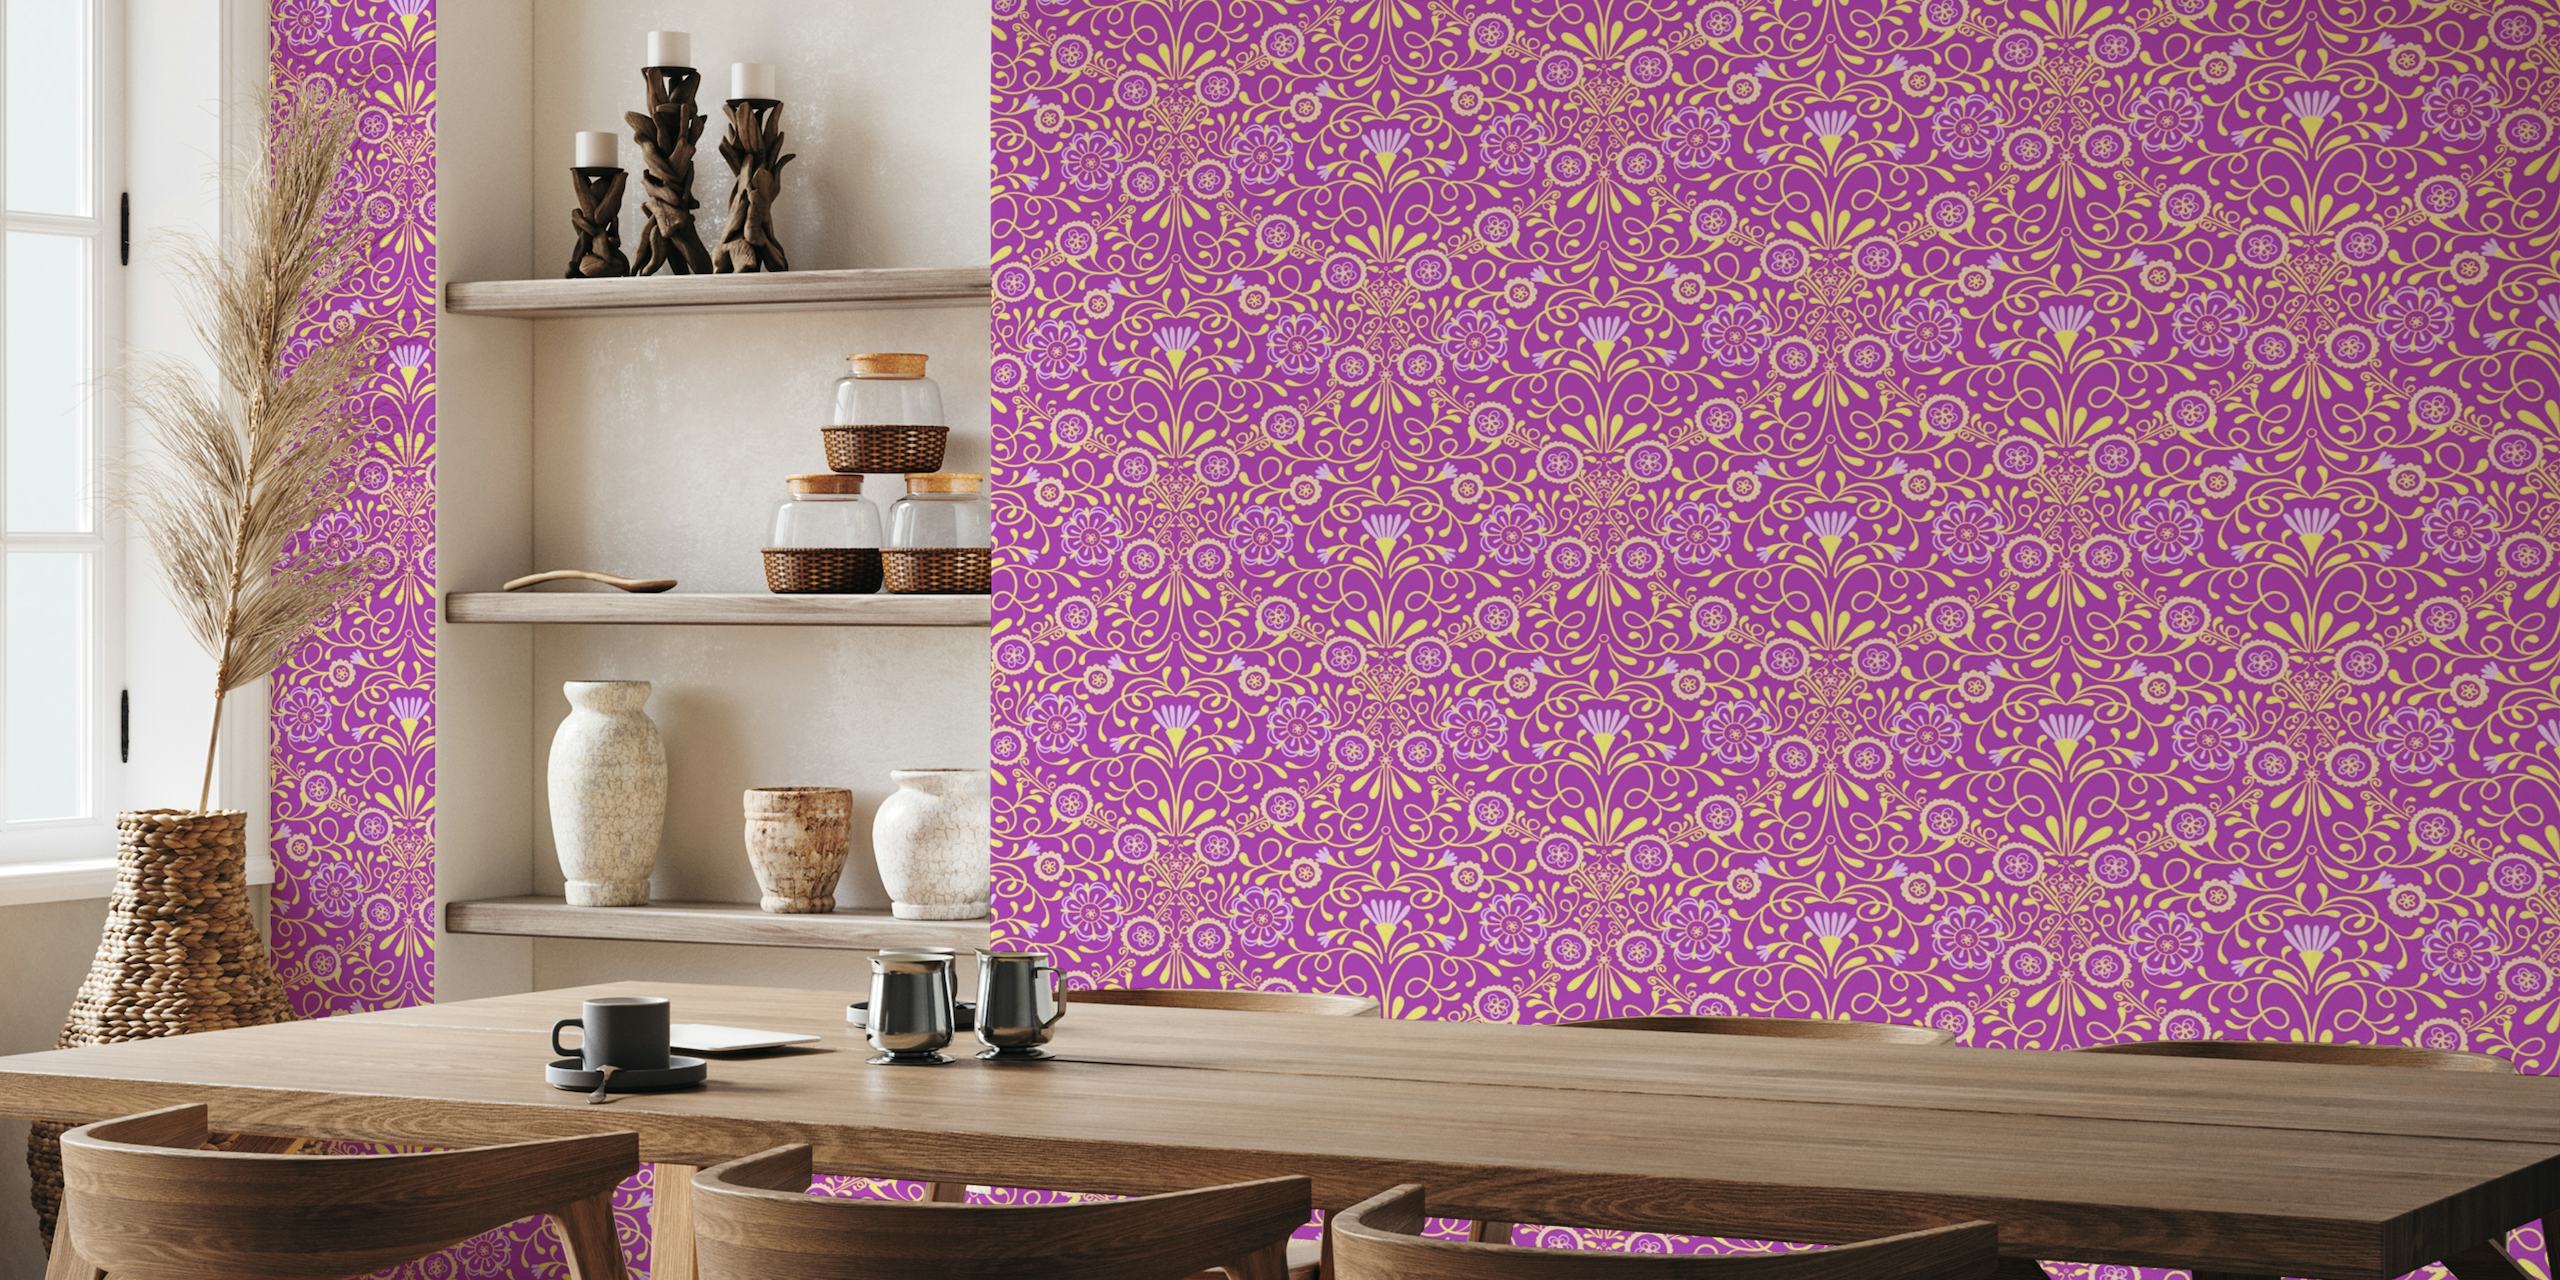 Tuscan Tile in Magenta, Yellow, and Purple carta da parati